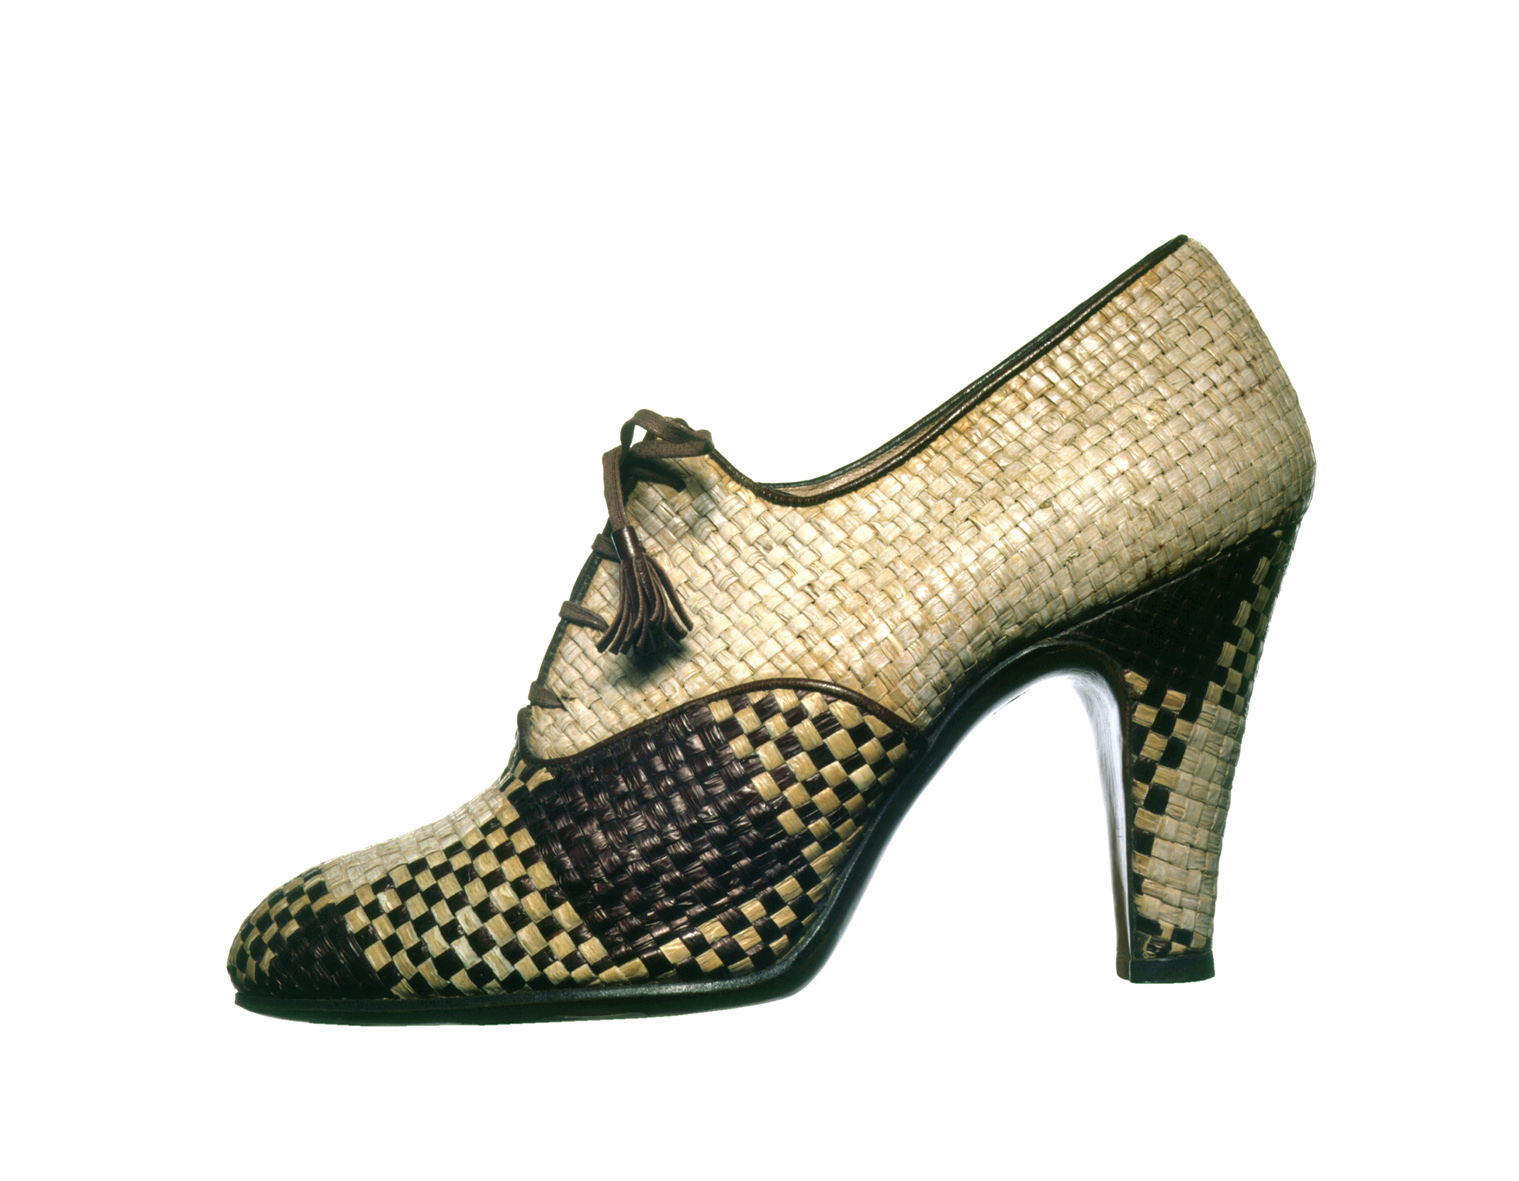 24 Salvatore Ferragamo，蕾丝鞋，1936-1938年。鞋面采用编织树皮和山羊皮制作。佛罗伦萨，Salvatore Ferragamo博物馆。<br>
<br>
 